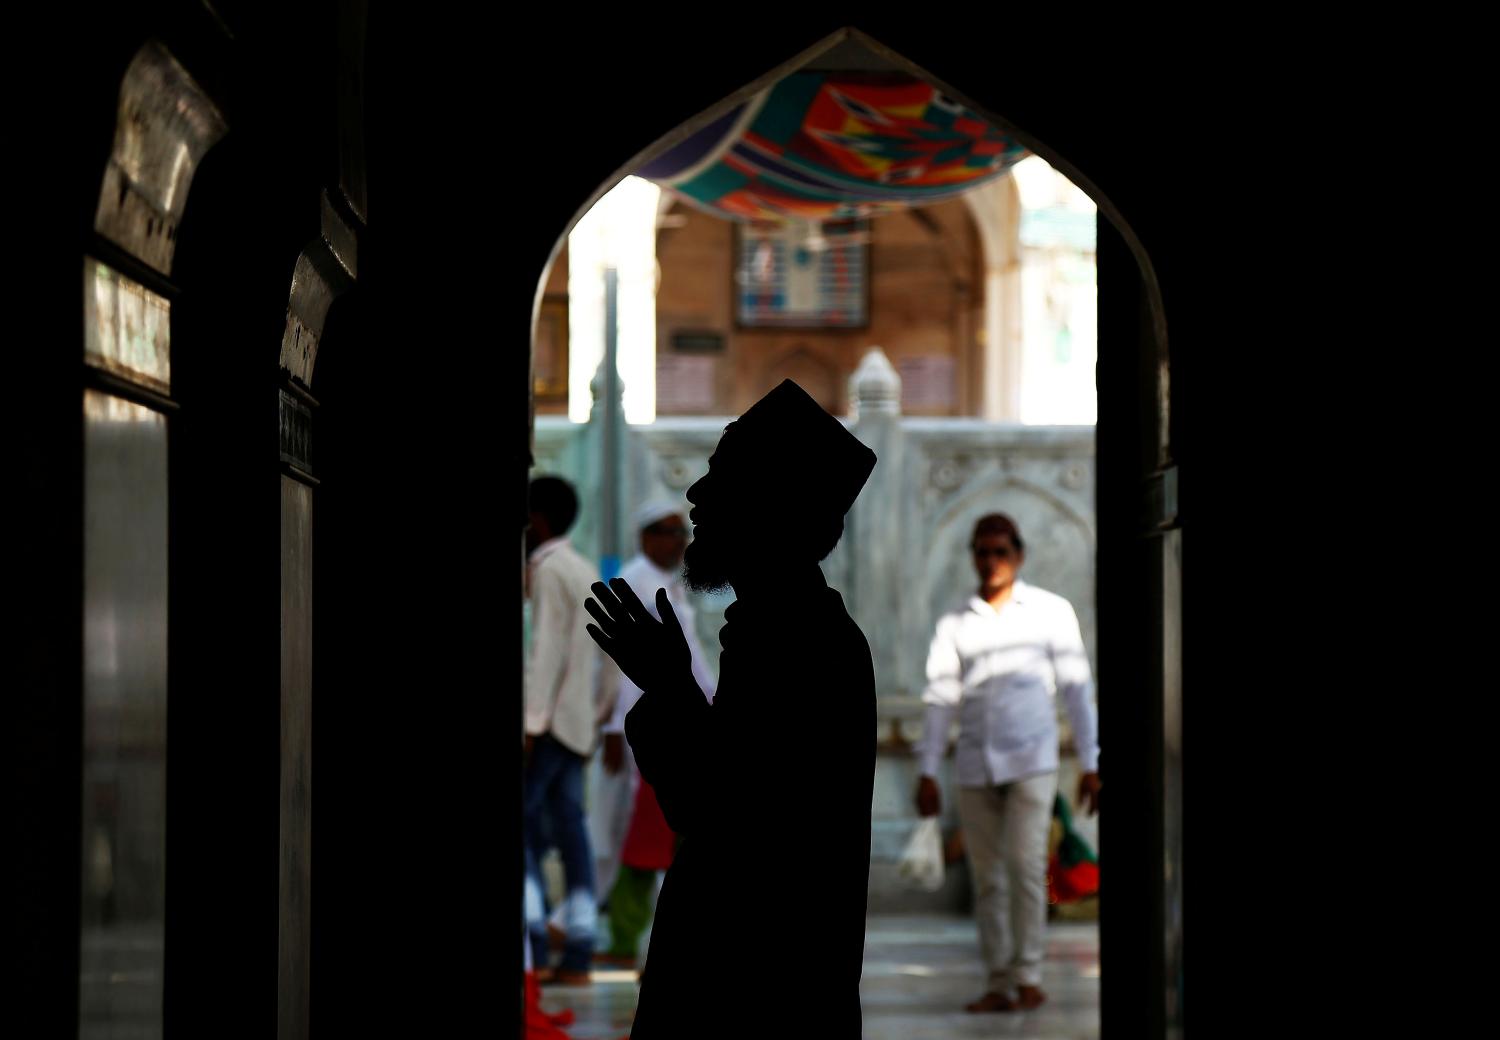 A man offers prayers inside the shrine of Sufi saint Khwaja Moinuddin Chishti during the holy month of Ramadan, in Ajmer, India June 8, 2017. REUTERS/Himanshu Sharma - RC1A46586140